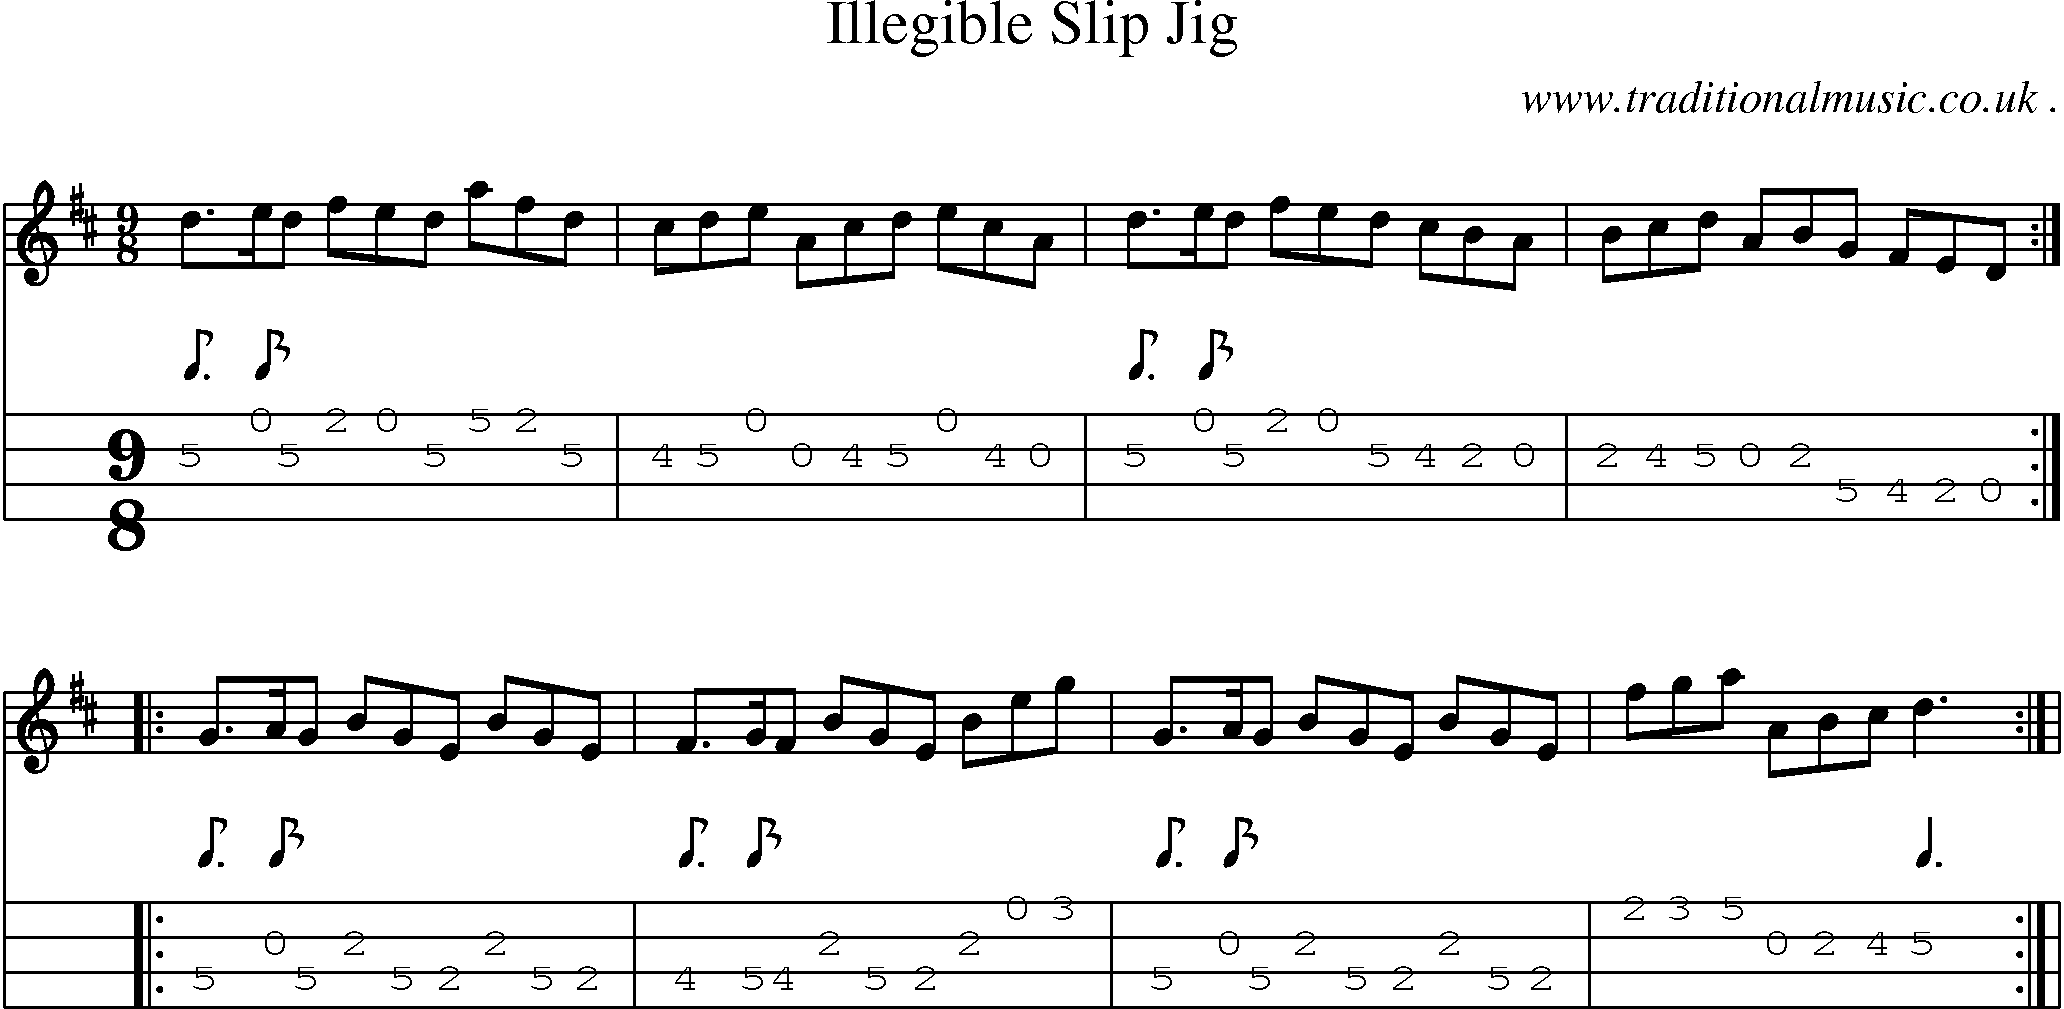 Sheet-Music and Mandolin Tabs for Illegible Slip Jig